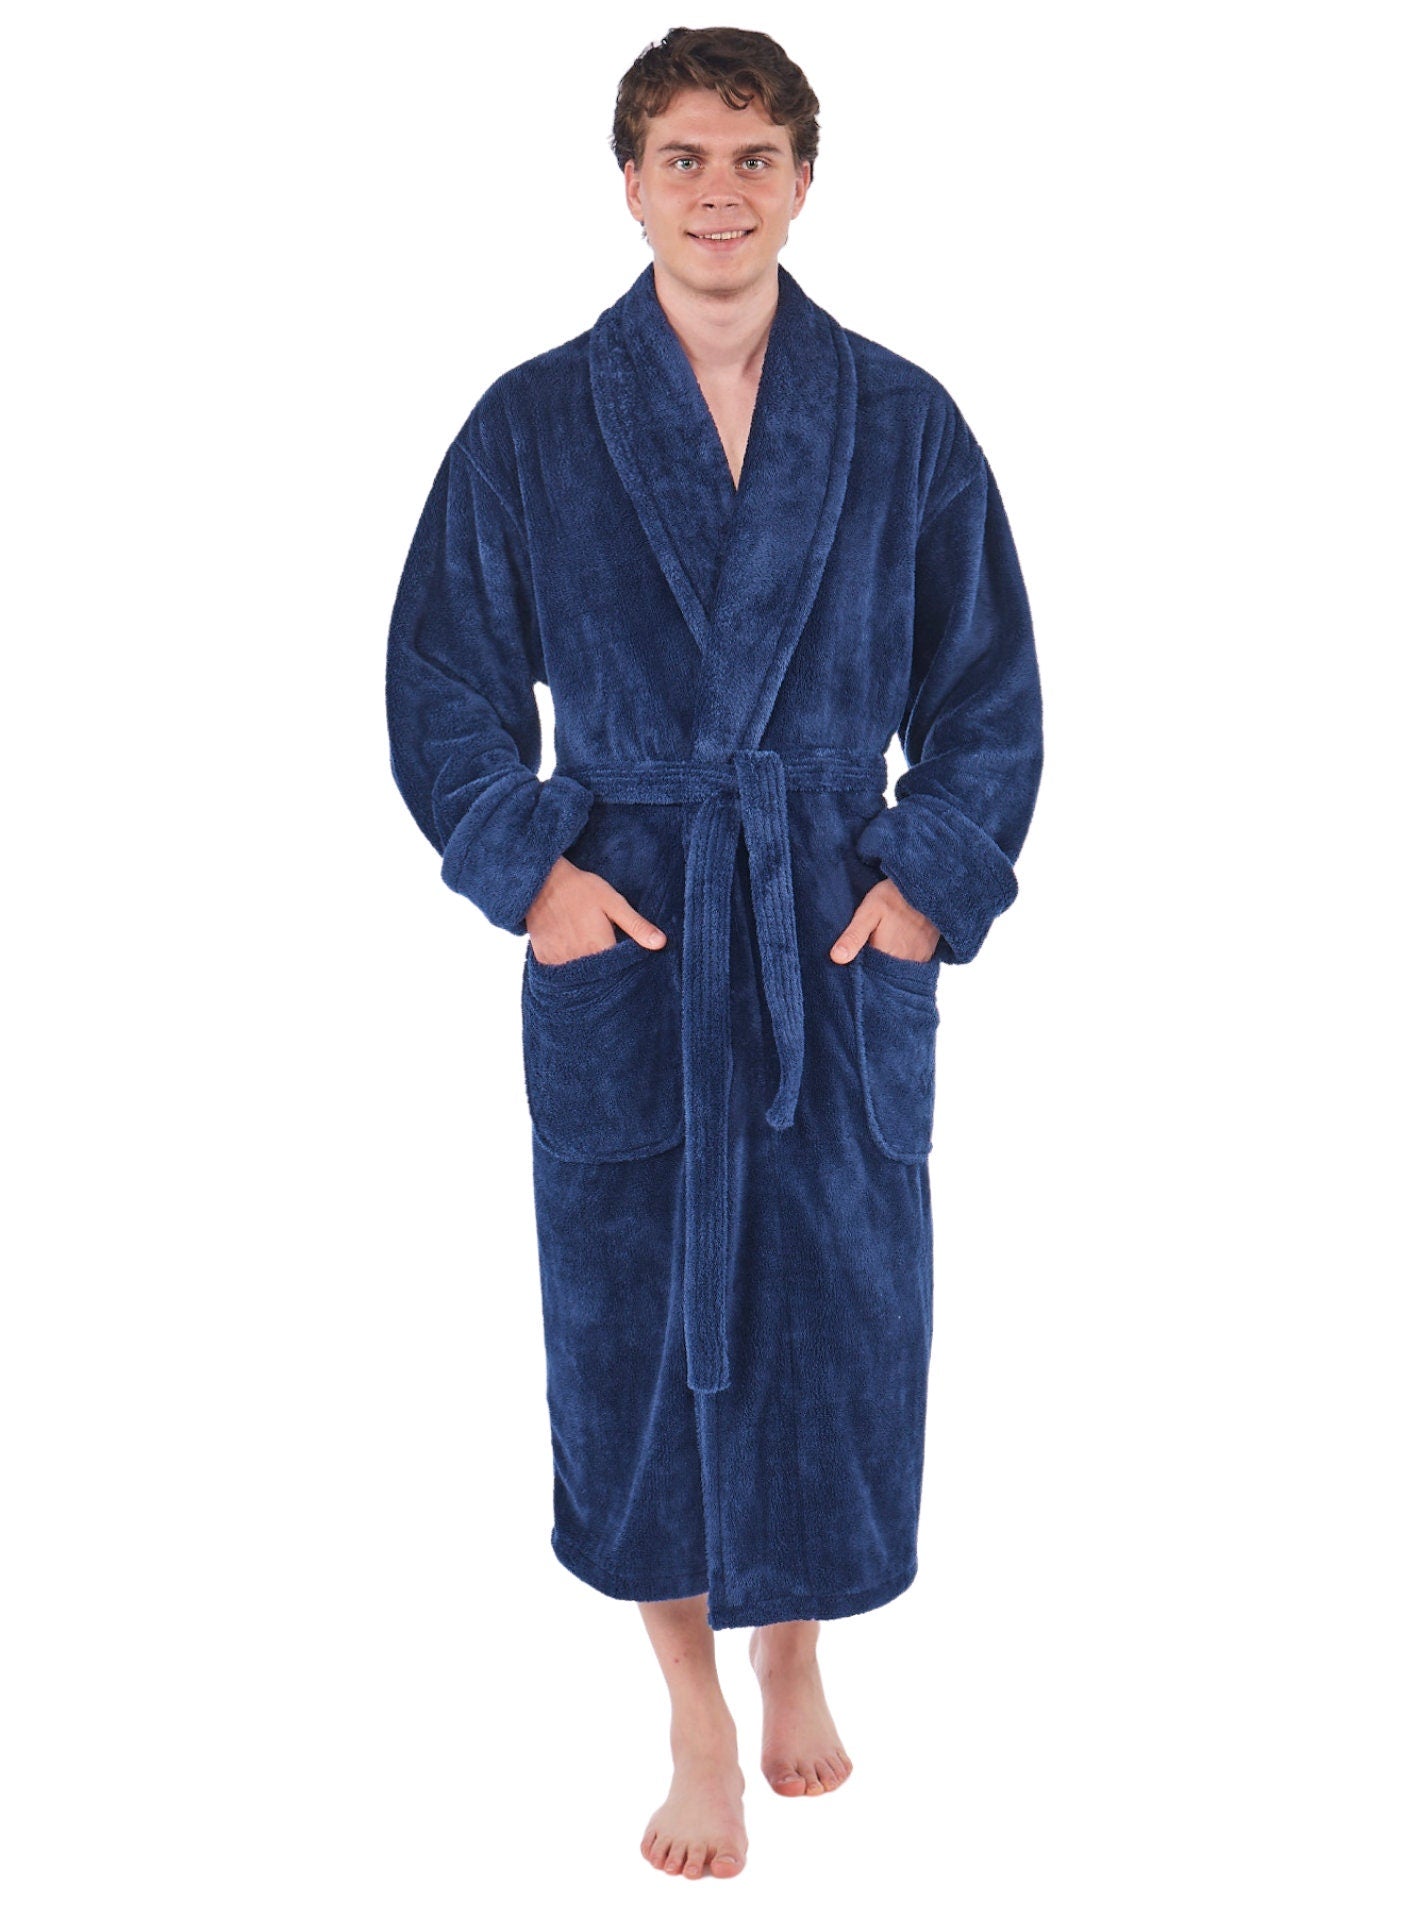 Men's Robe, Gift for Him, Personalized, Fleece Plush, Soft and Warm Shawl Robe, Made in Turkey, Monogrammed, Custom Wedding, Birthday Gift